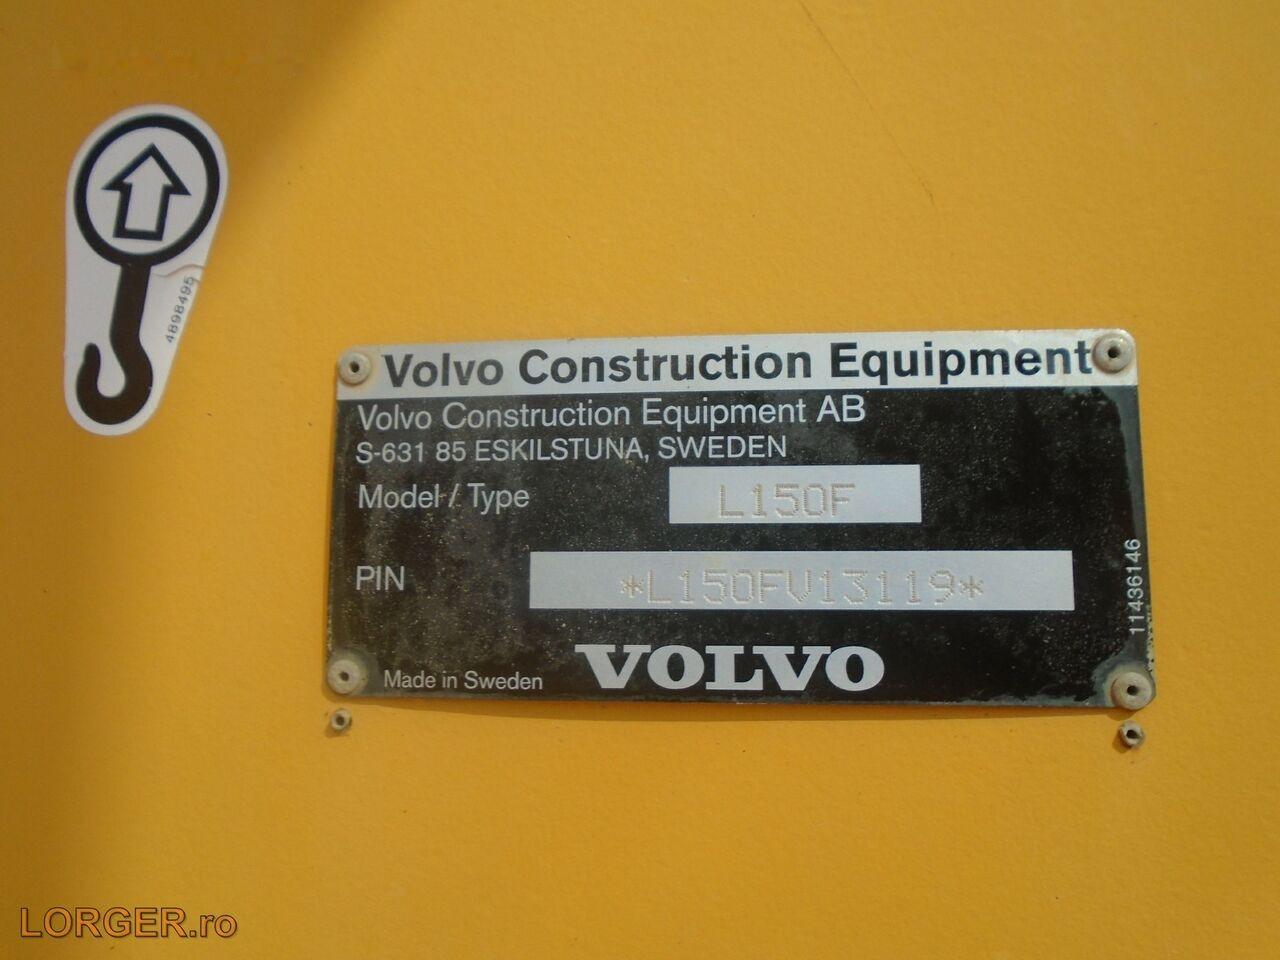 Wheel loader Volvo L 150 F